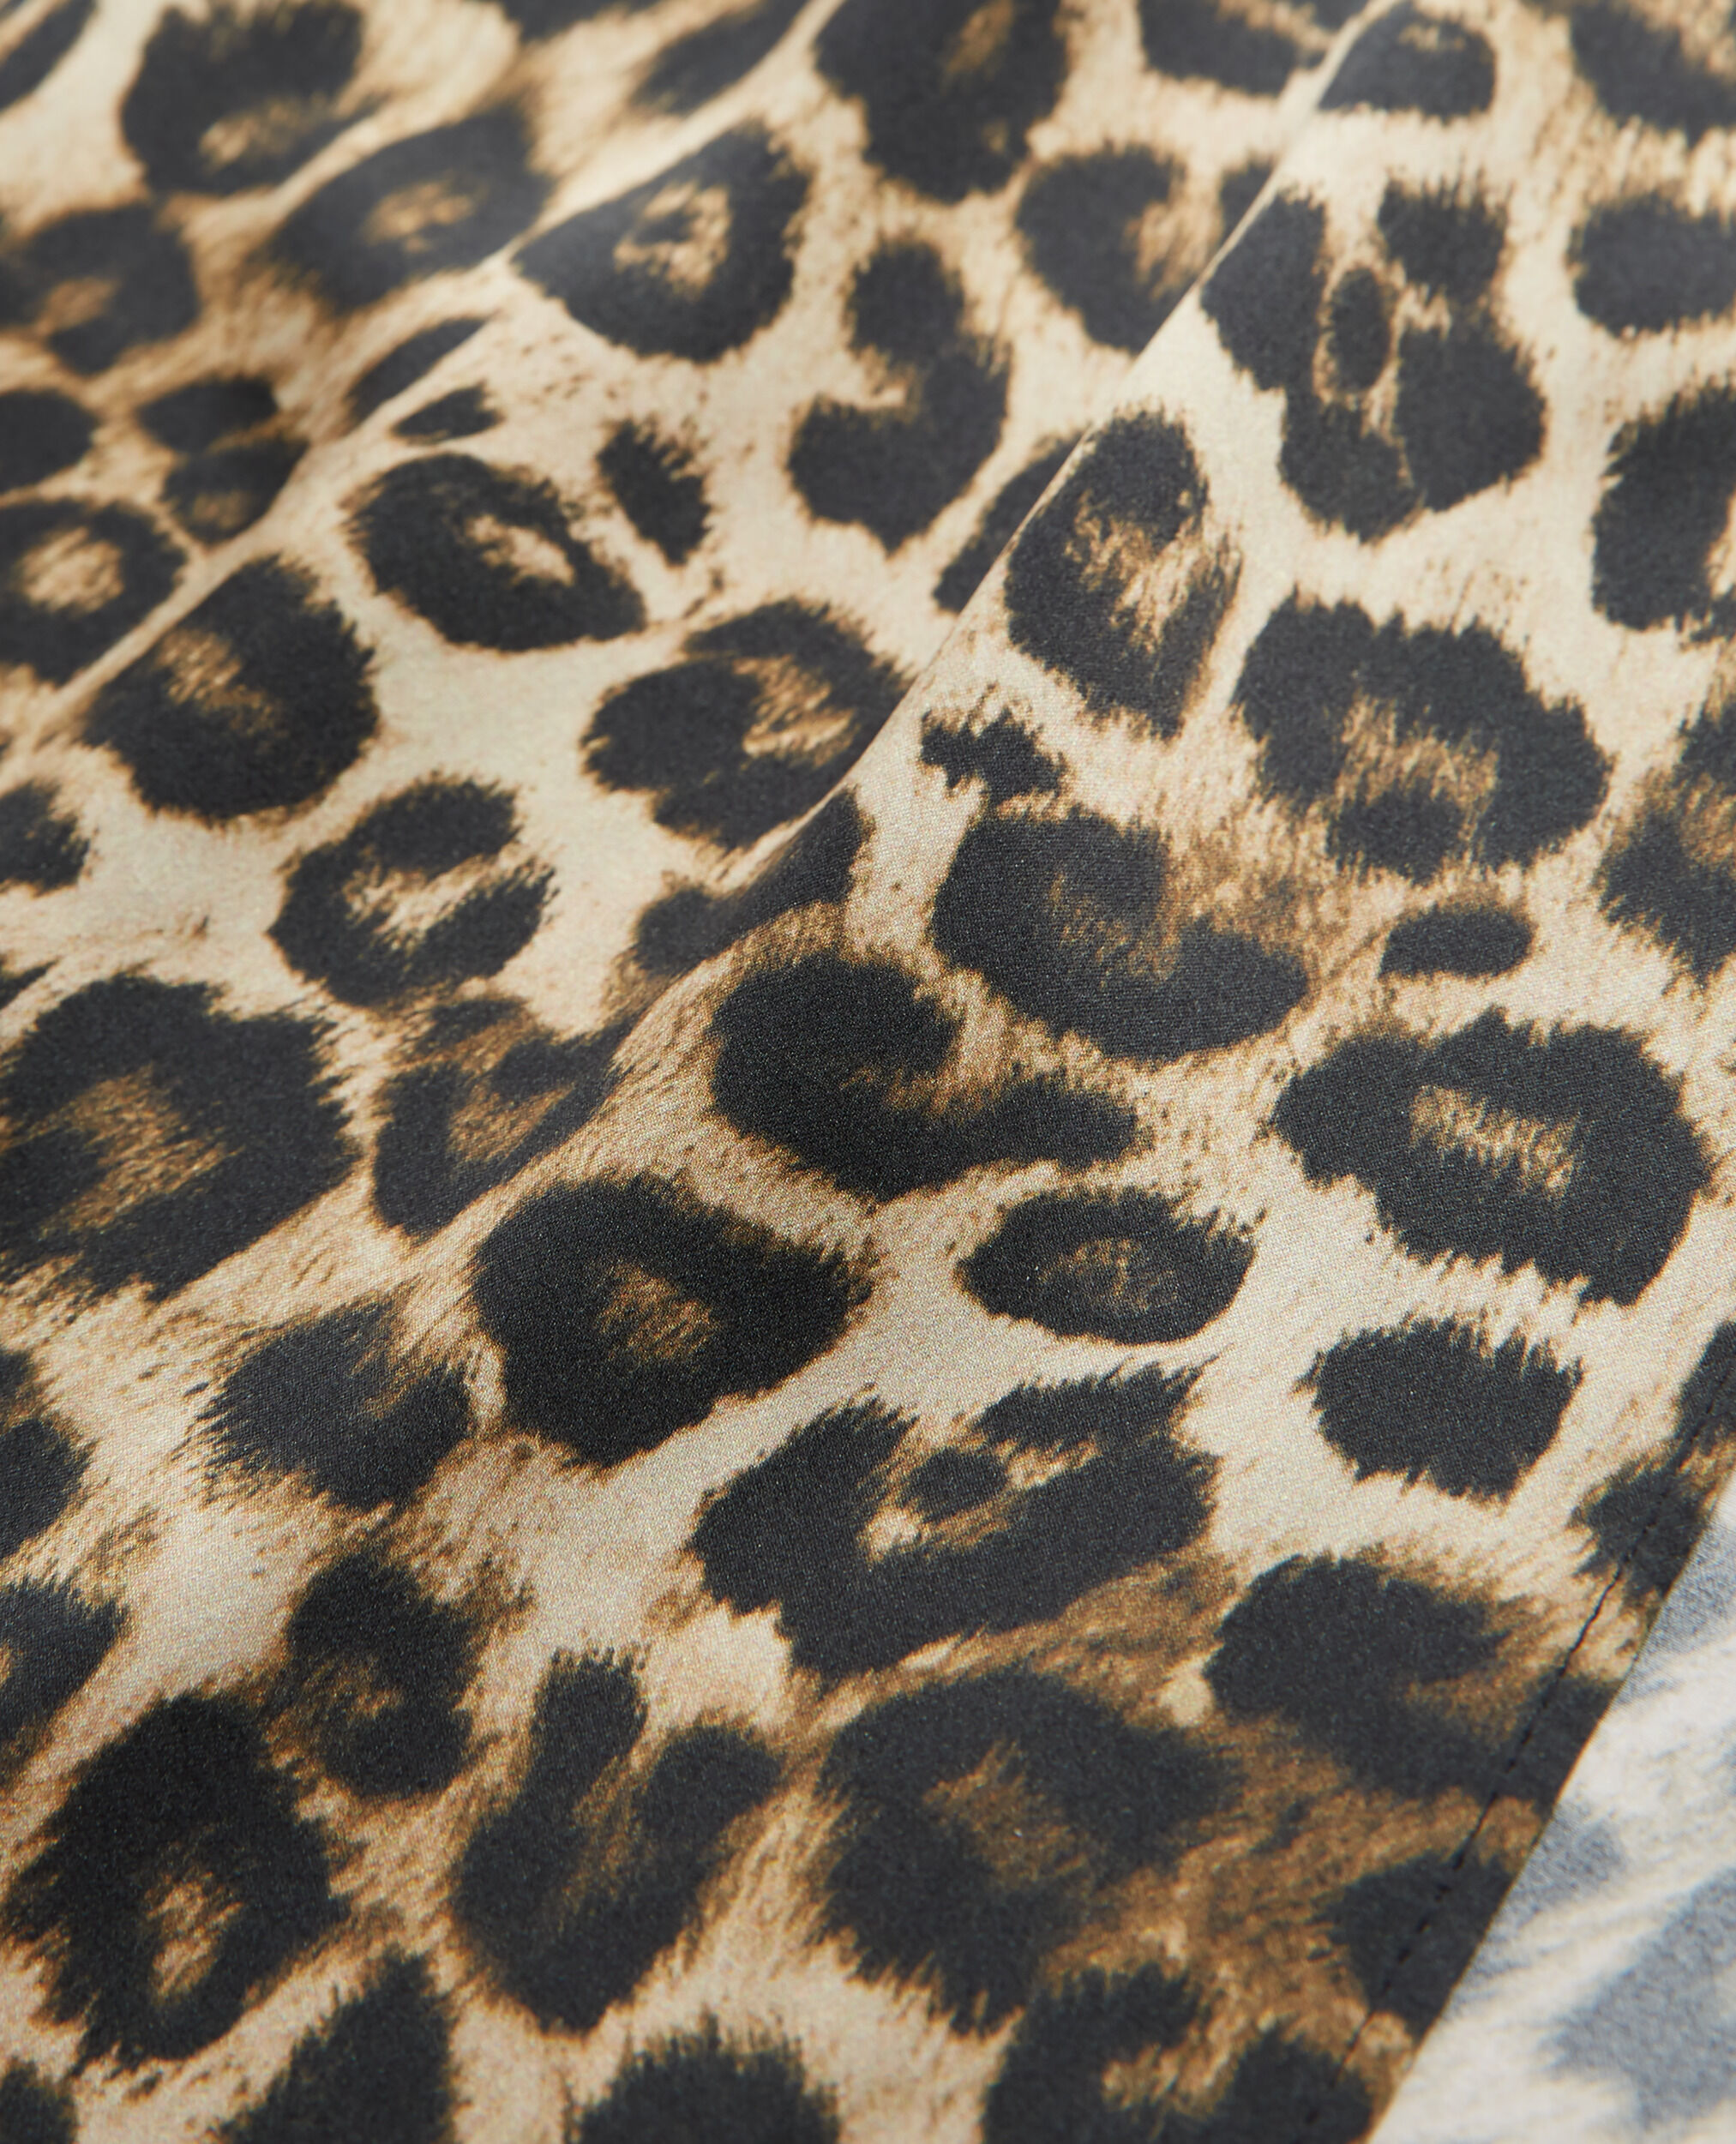 Long leopard print silk dress, LEOPARD, hi-res image number null